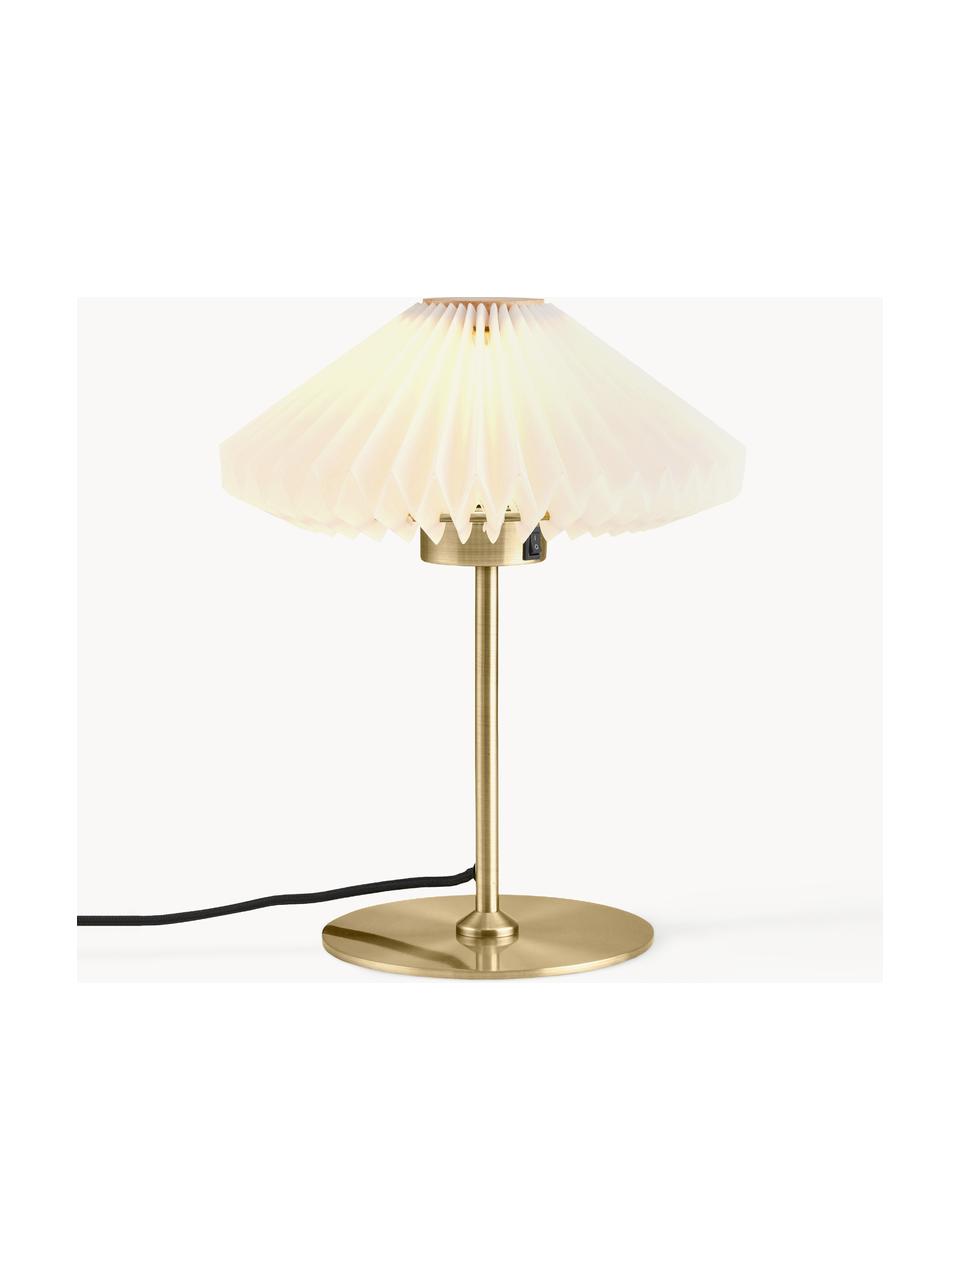 Malá stolní lampa Paris, Bílá, zlatá, Ø 24 cm, V 32 cm